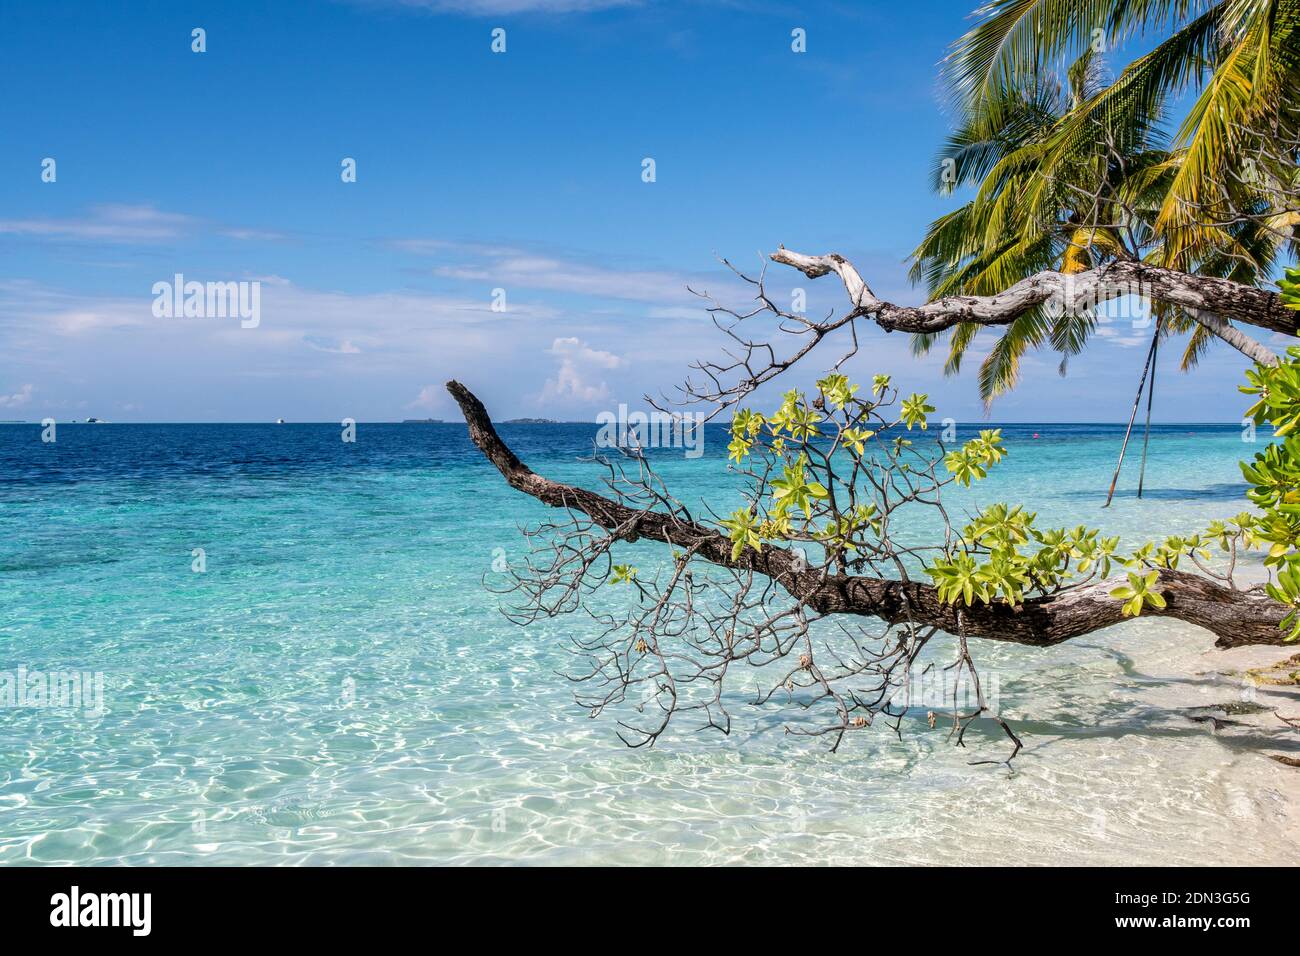 Tropical island coast landscape with Heliotrope tree branch (Heliotropium foertherianum, octopus bush), palm trees, white sandy beach and turquoise oc Stock Photo